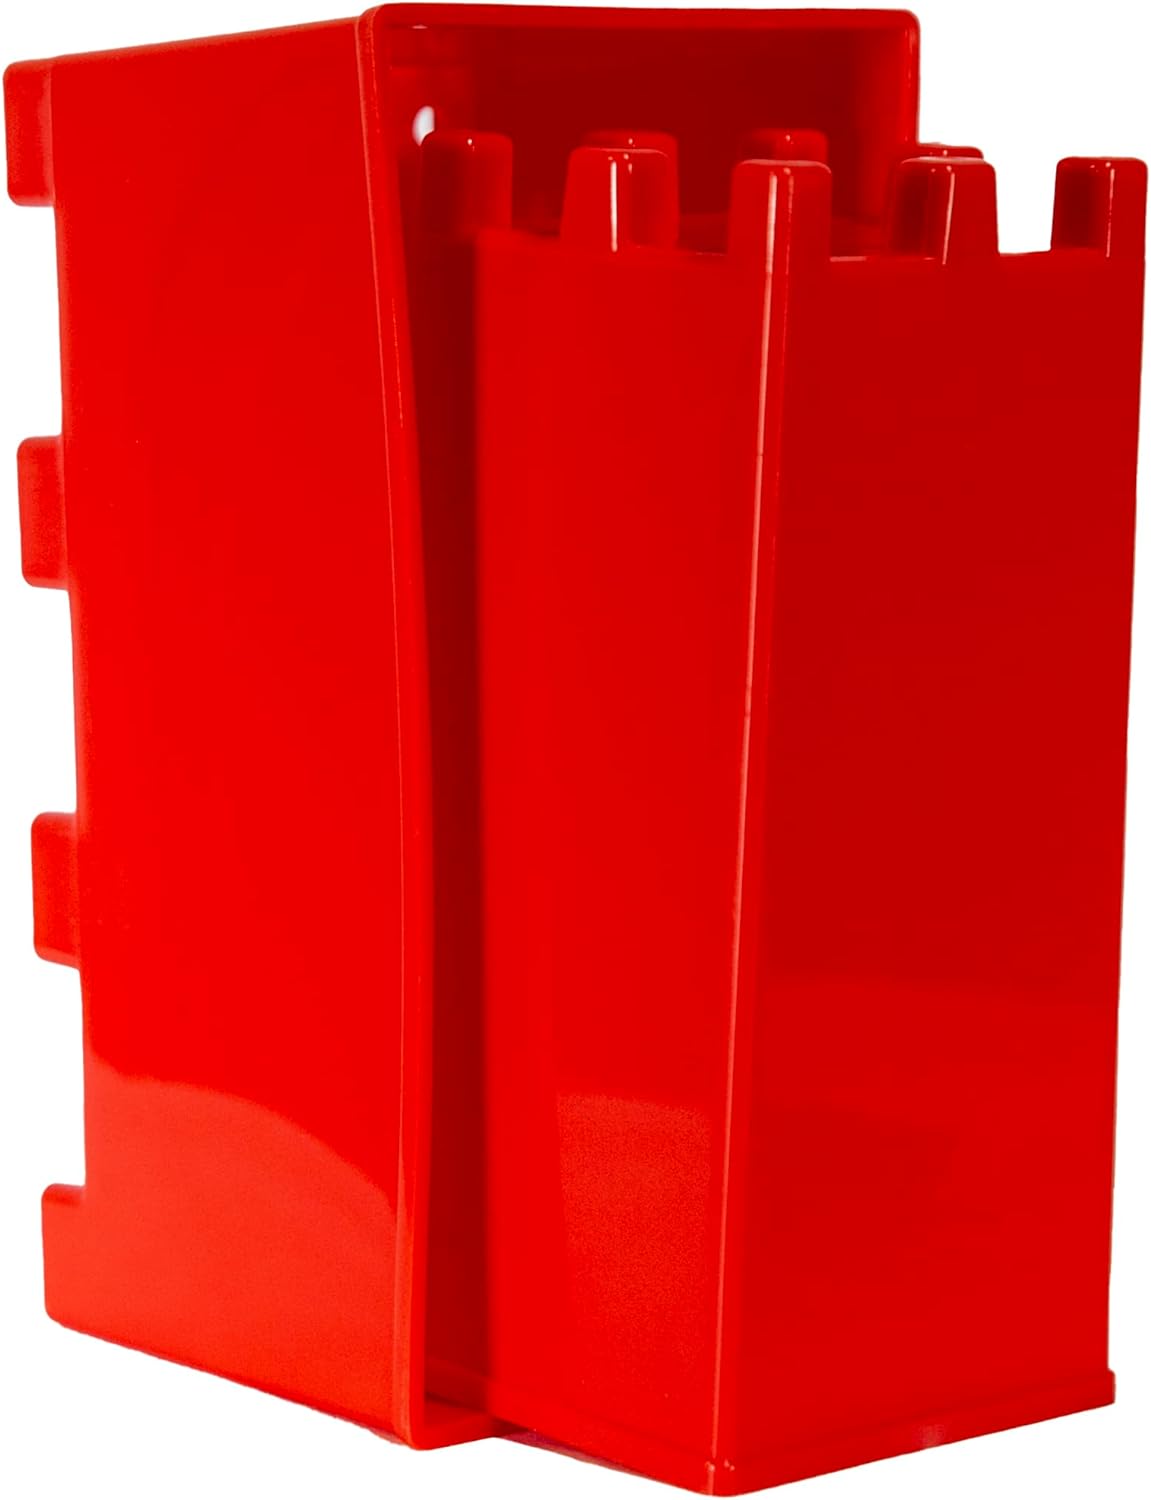 Snow Fort Building Kit | 4-Piece Set, Red or Blue